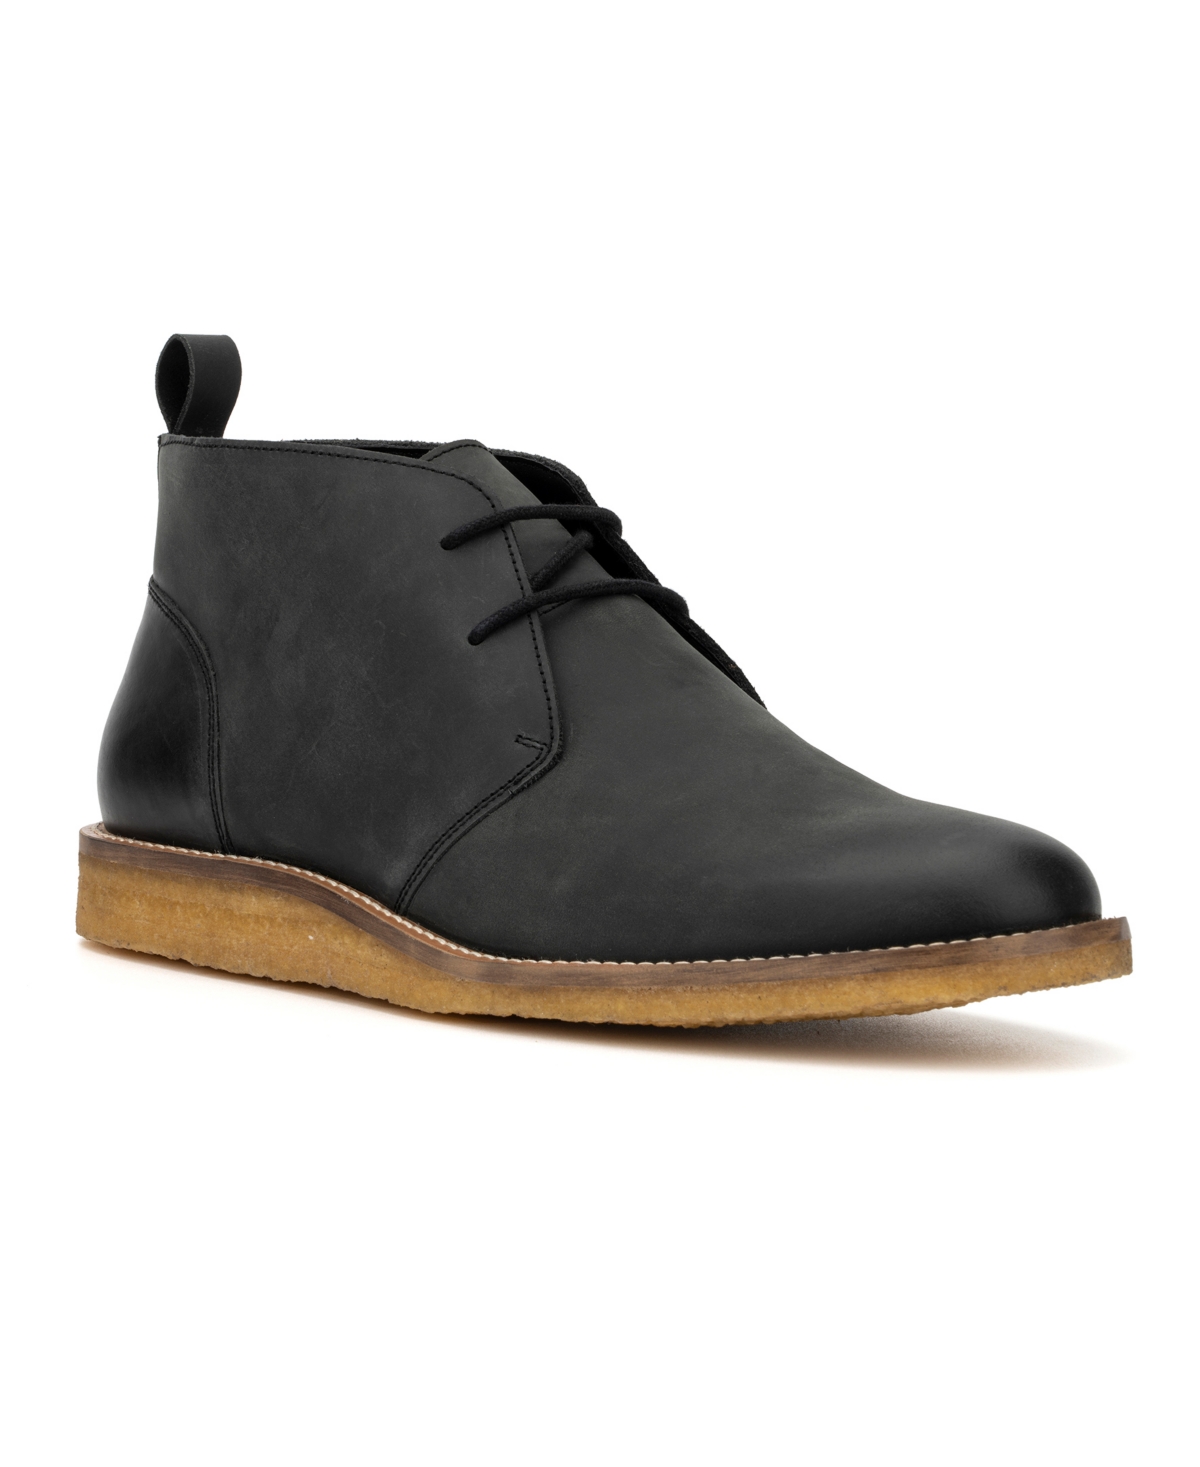 Men's Deegan Leather Chukka Boots - Black